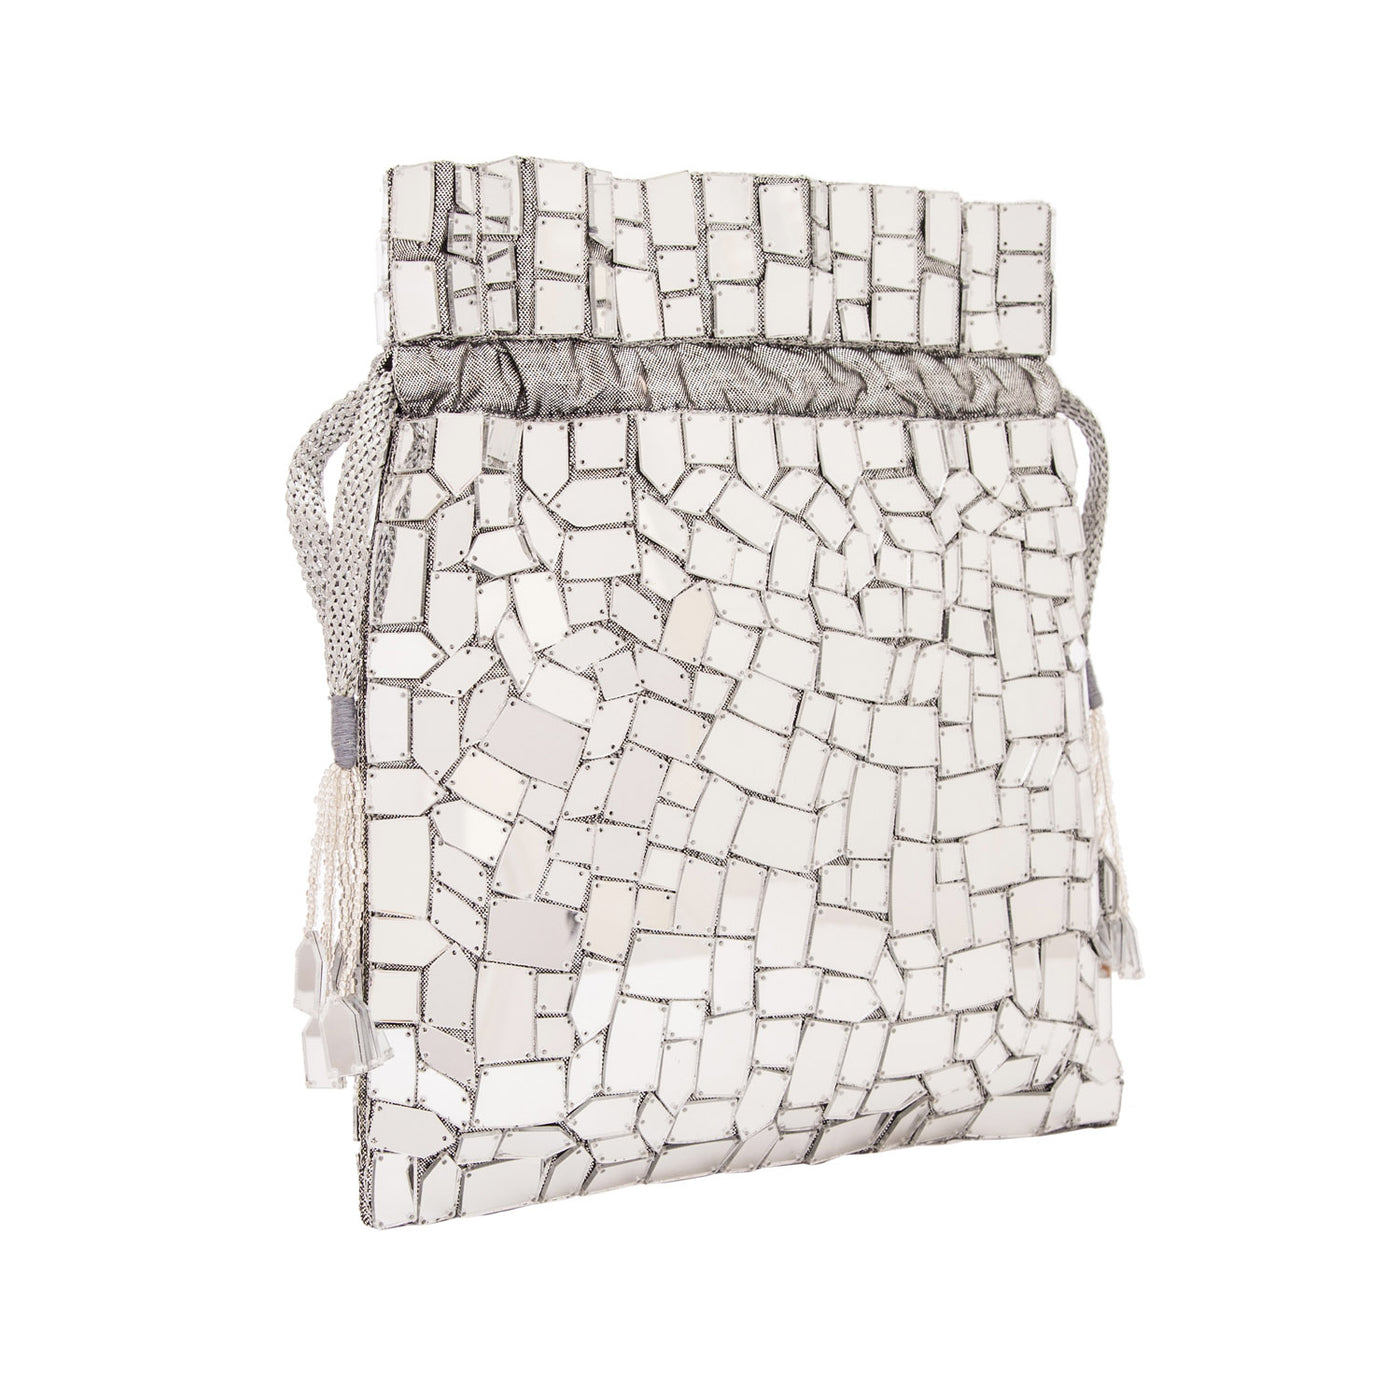 Pixie Silver Bucket Bag - Women's clutch bag for evening wear